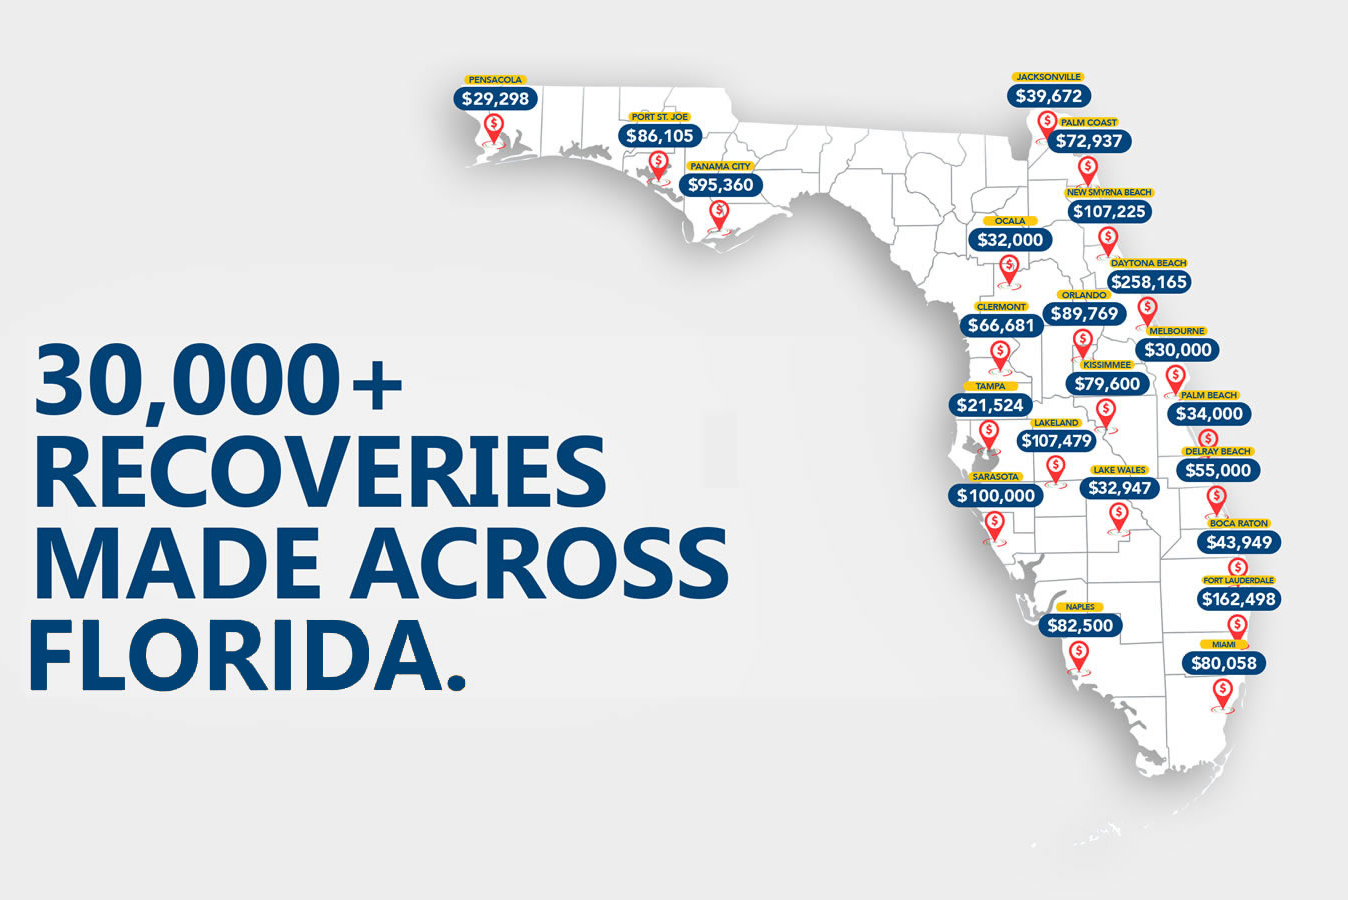 30,000+ recoveries made across Florida.